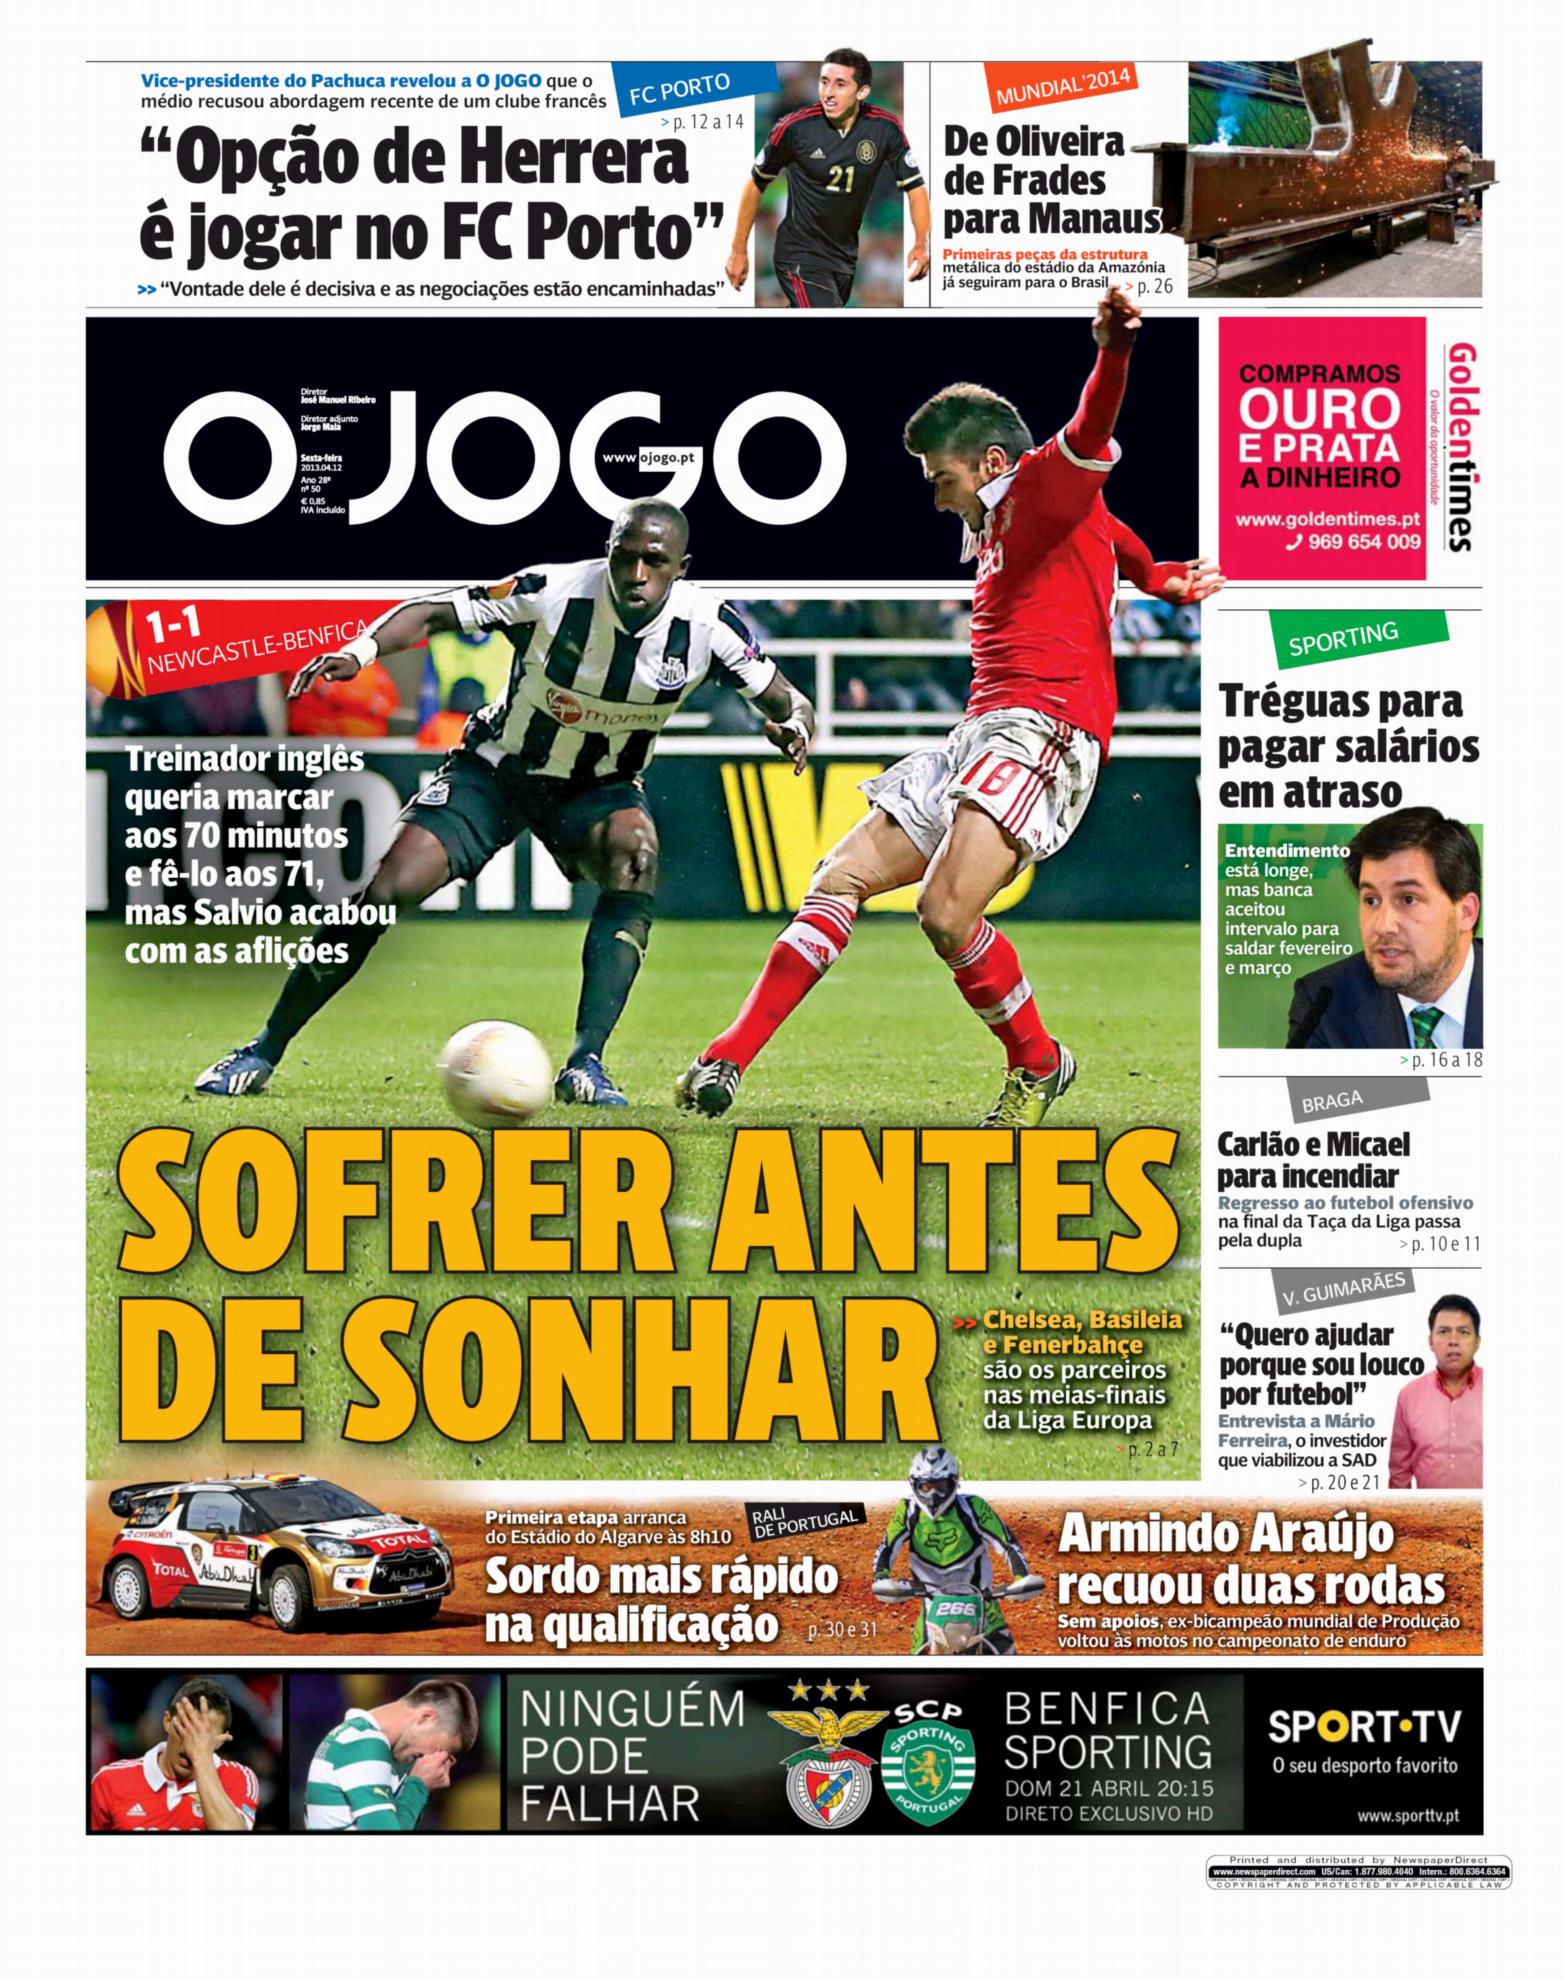 Ojogo - Newcastle v Benfica